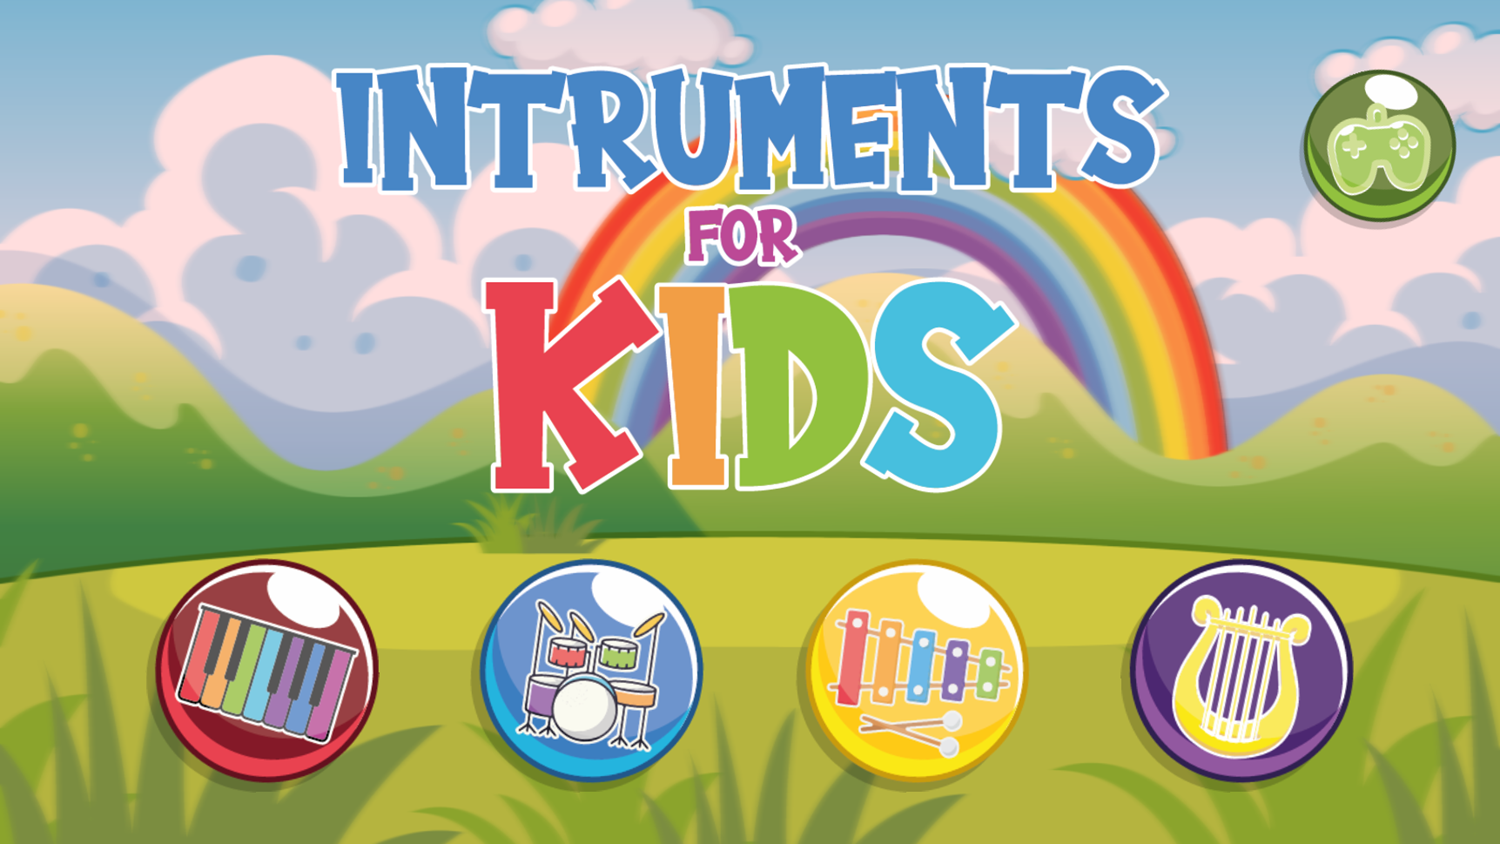 Instruments for Kids Welcome Screen Screenshot.